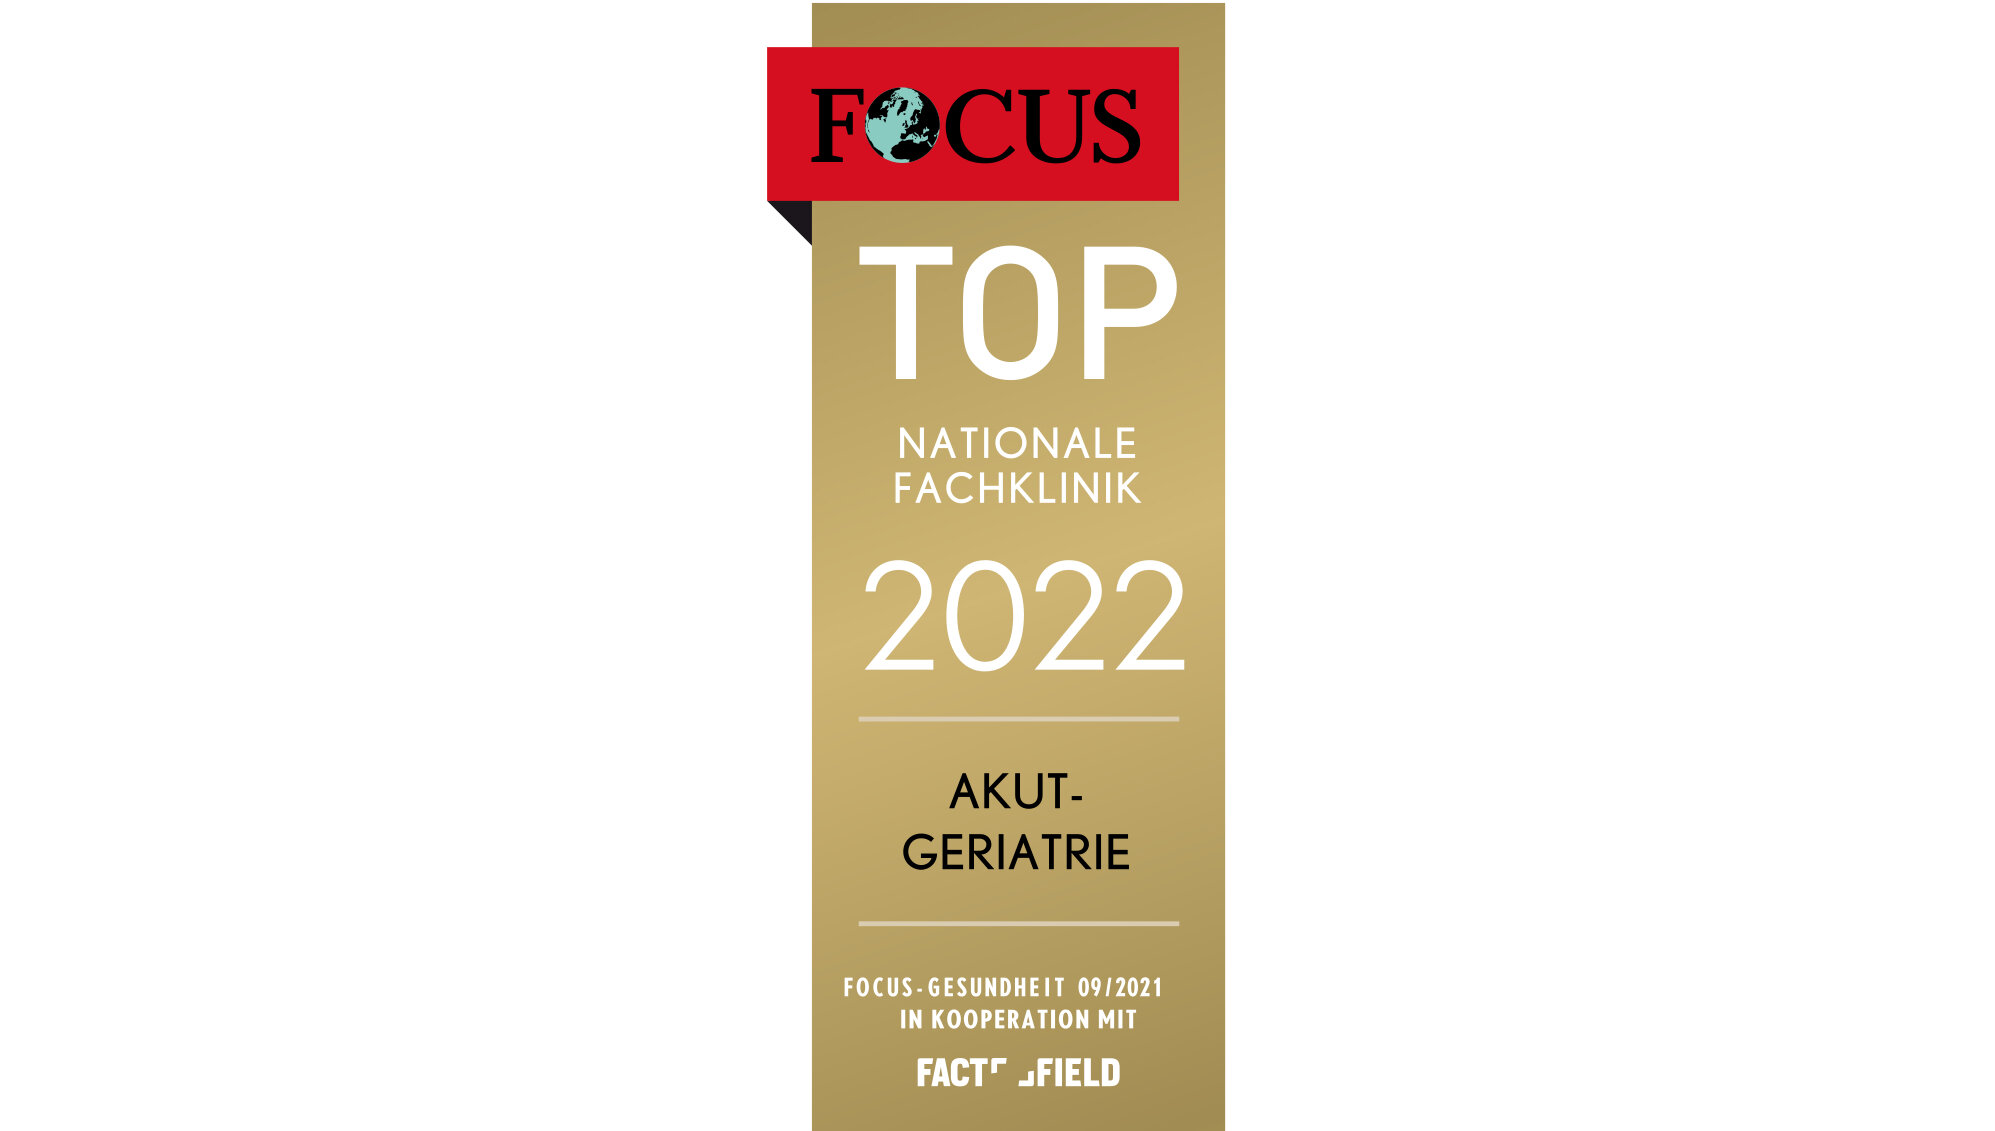 Focus Top Nationale Fachklinik 2022